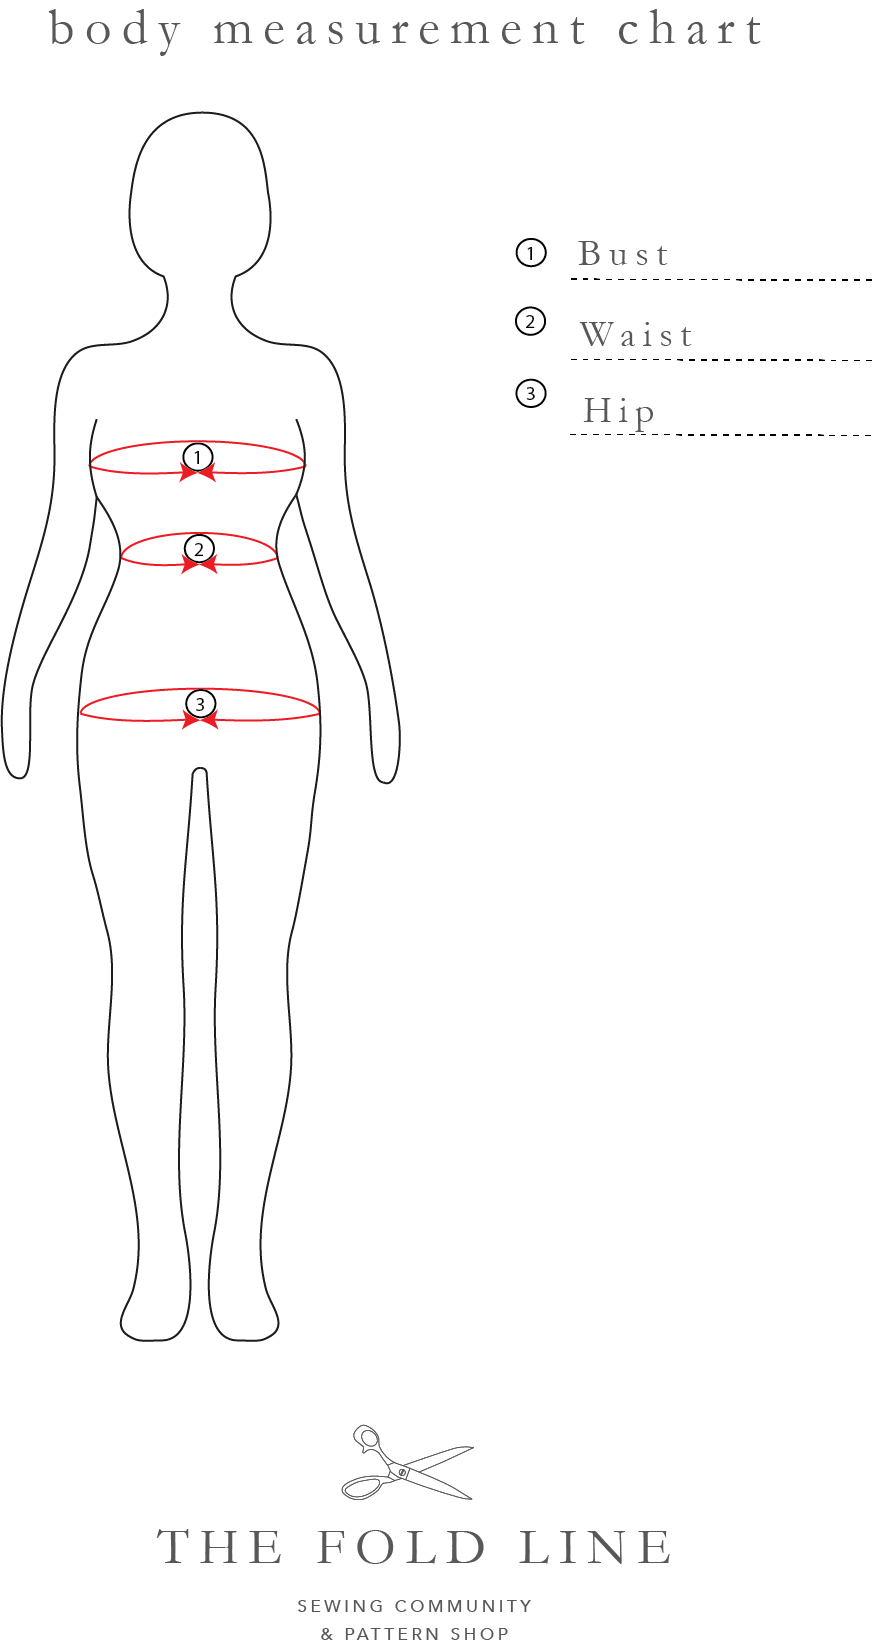 8 Dress size chart women ideas  sewing measurements, dress size chart women,  sewing patterns